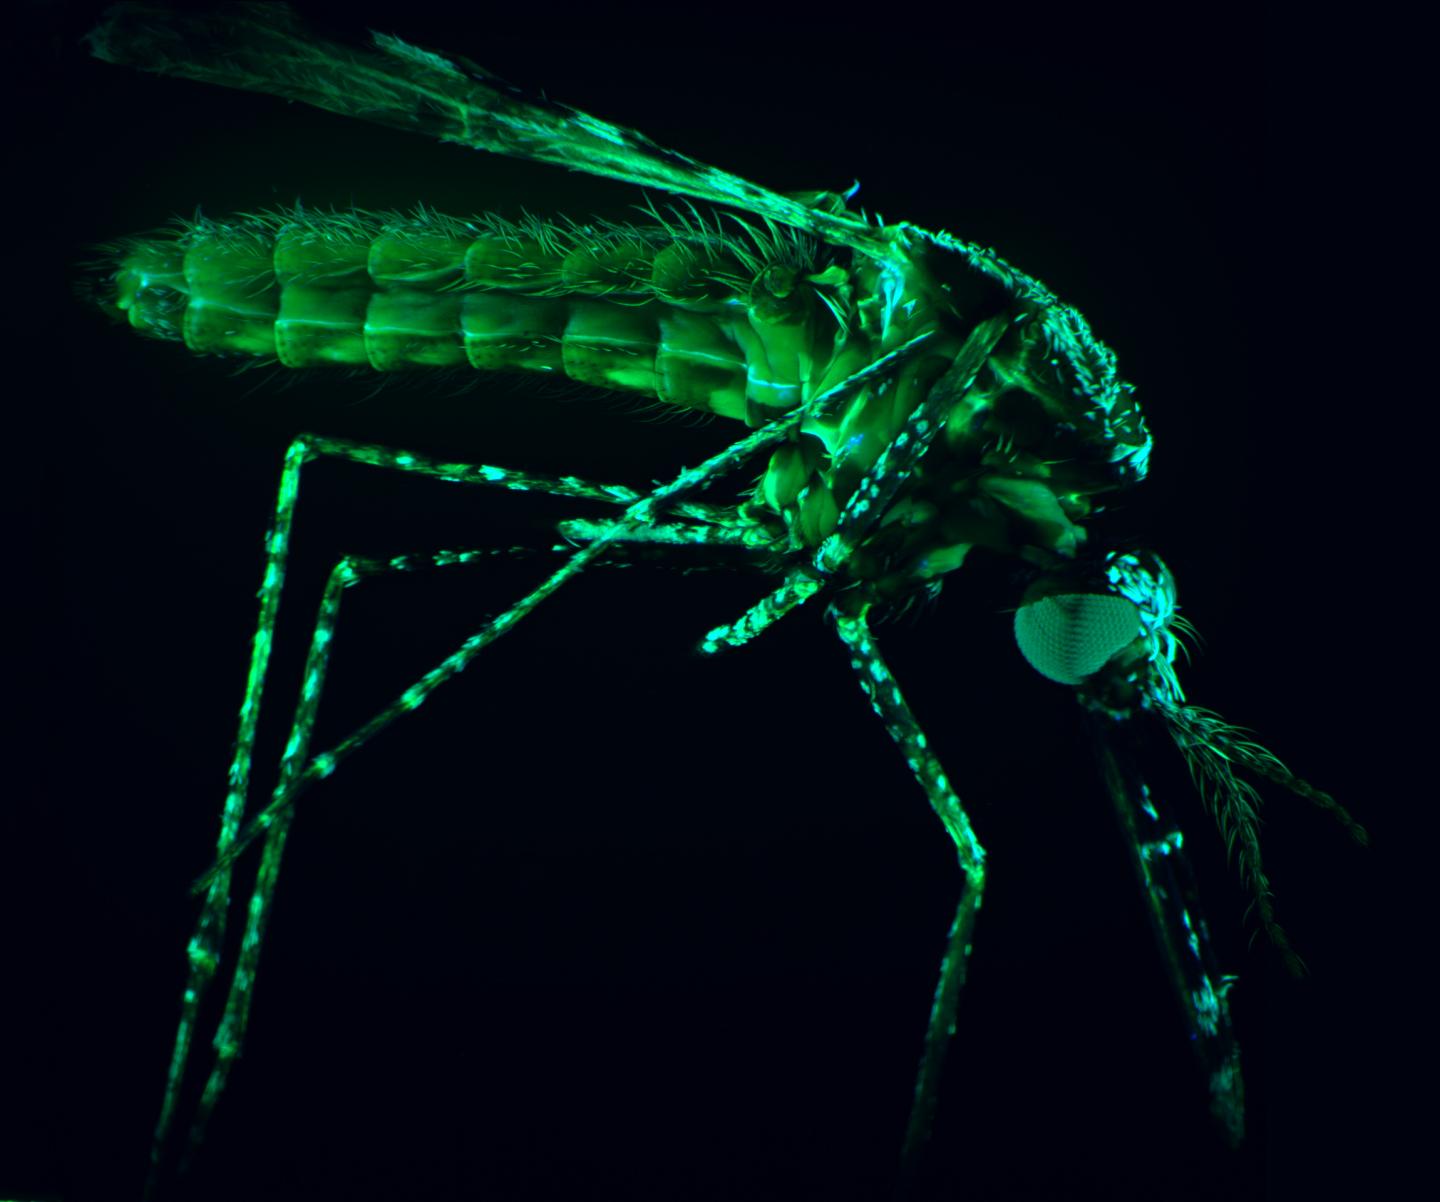 Mosquito that transmits malaria